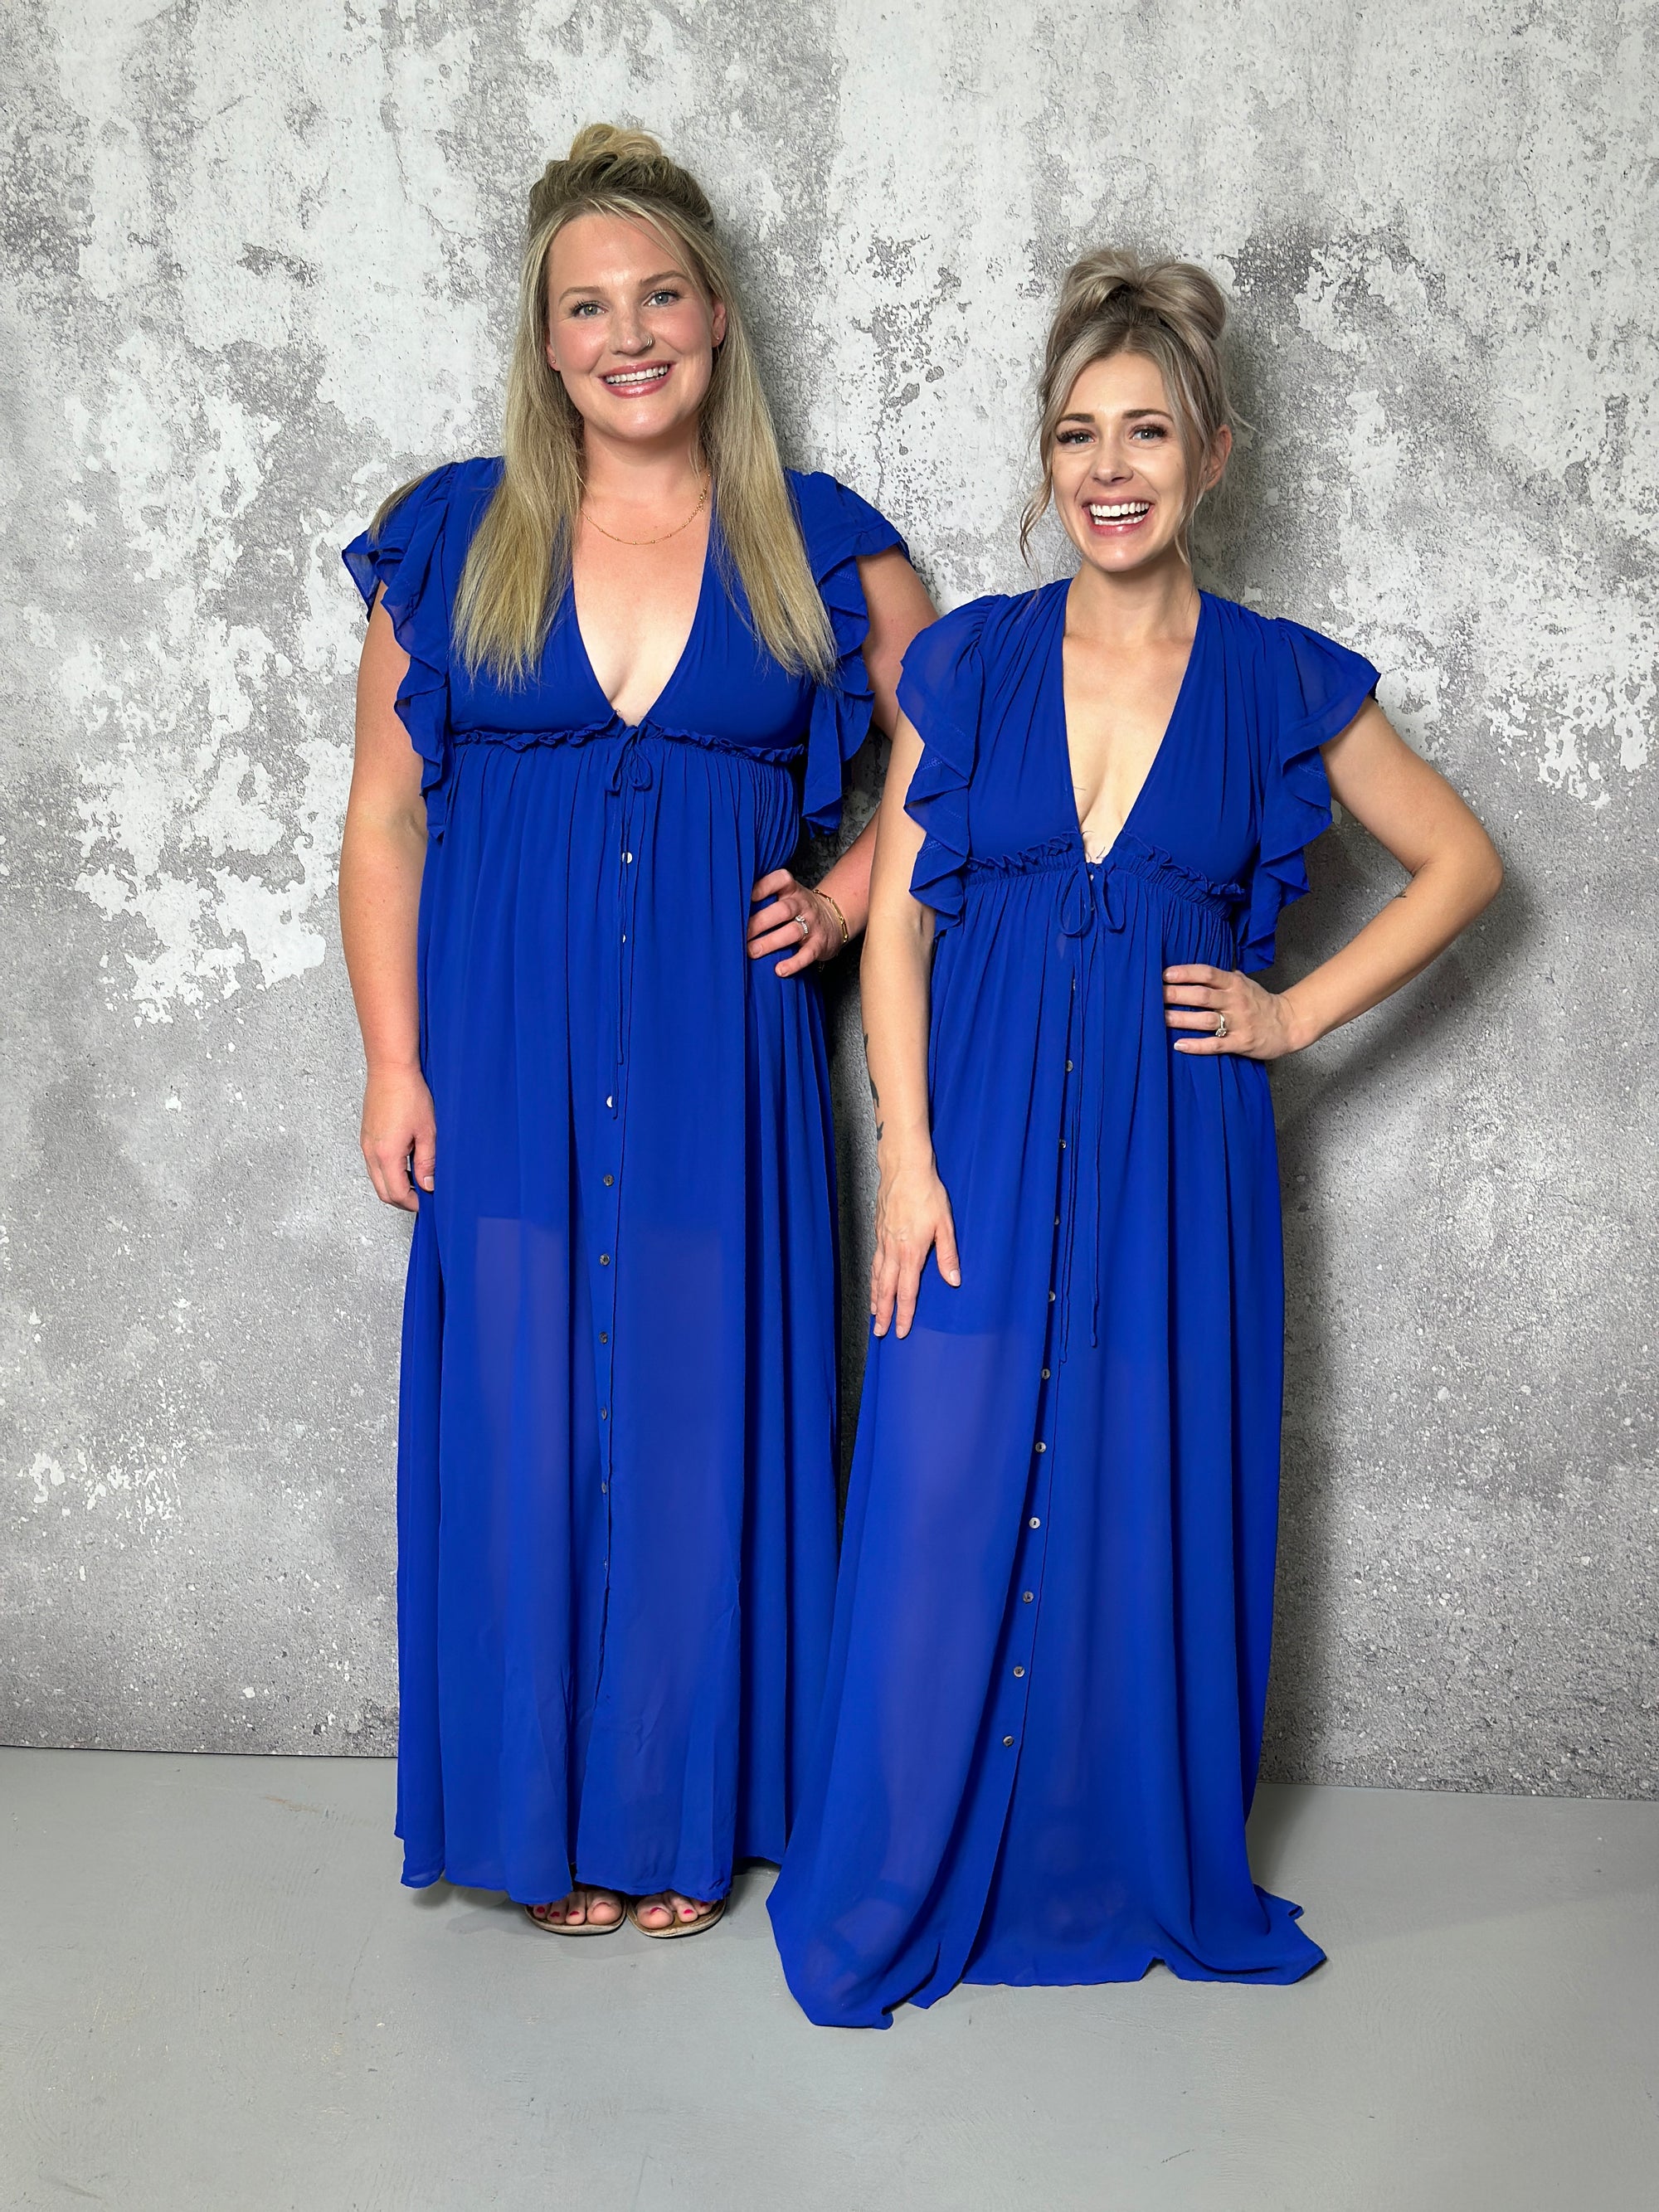 Royal Blue Ruffle Dress - FINAL SALE